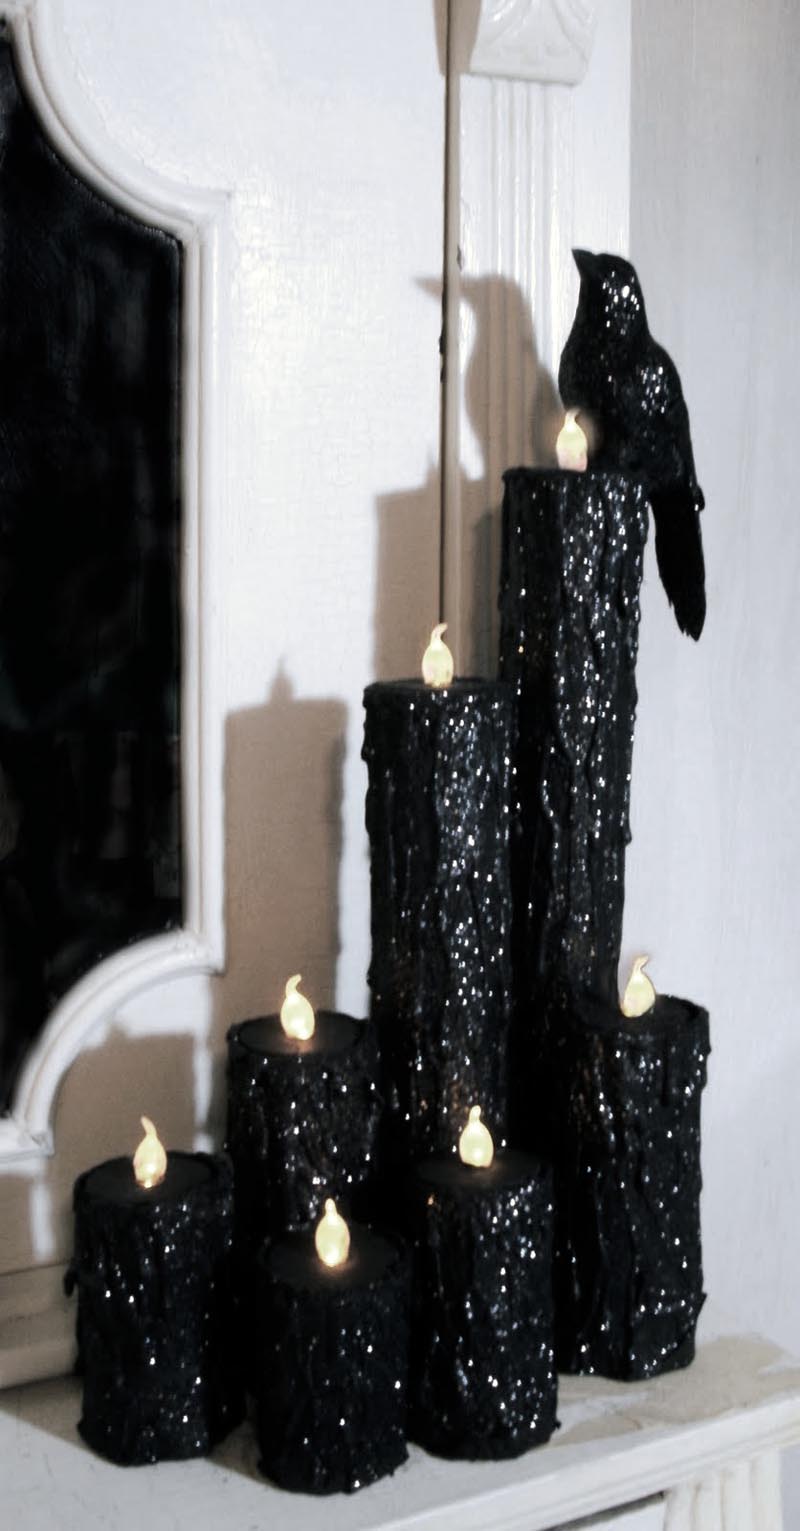 DIY Black Halloween Candles